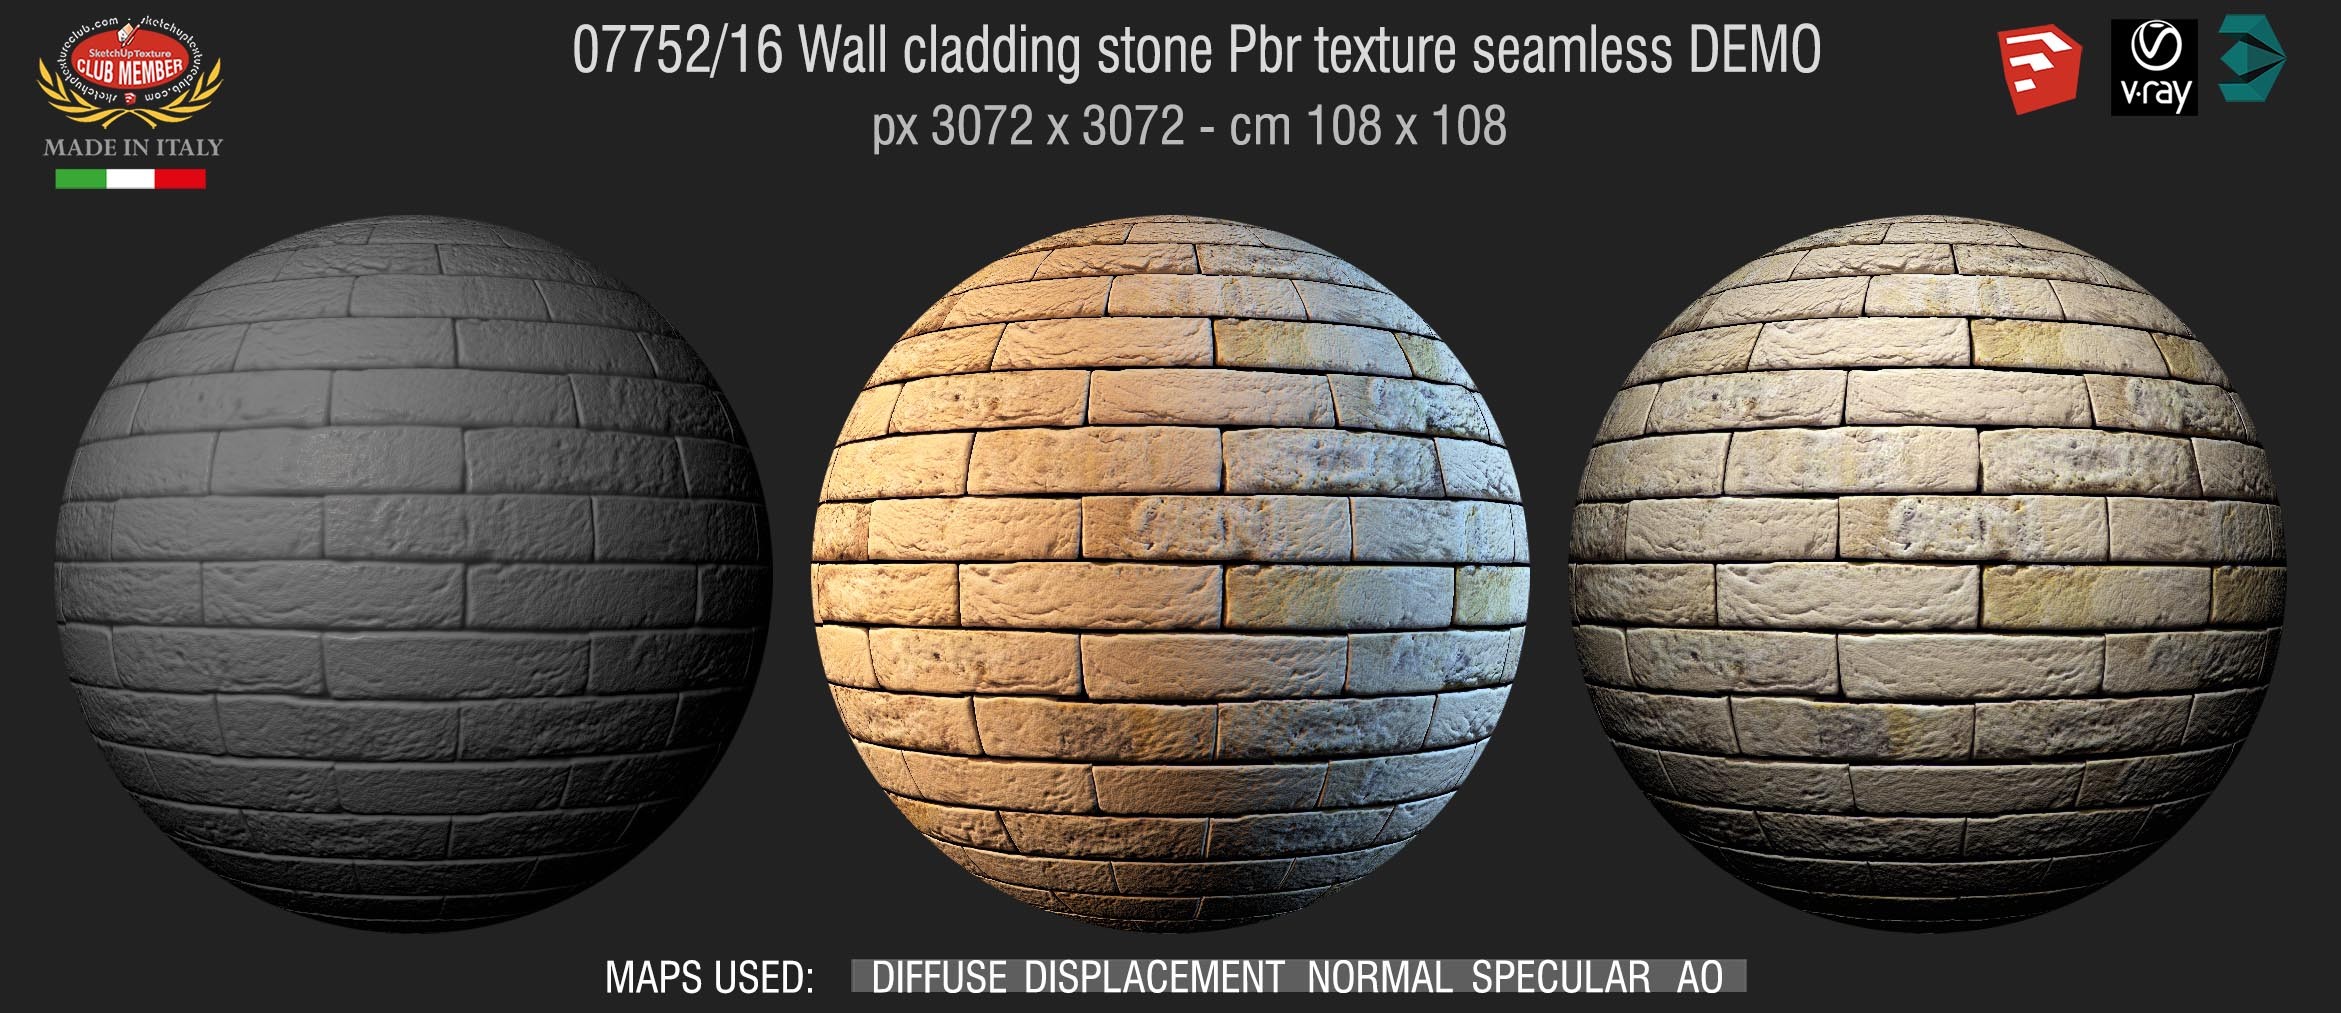 07752/16 Wall cladding stone pbr texture seamless demo